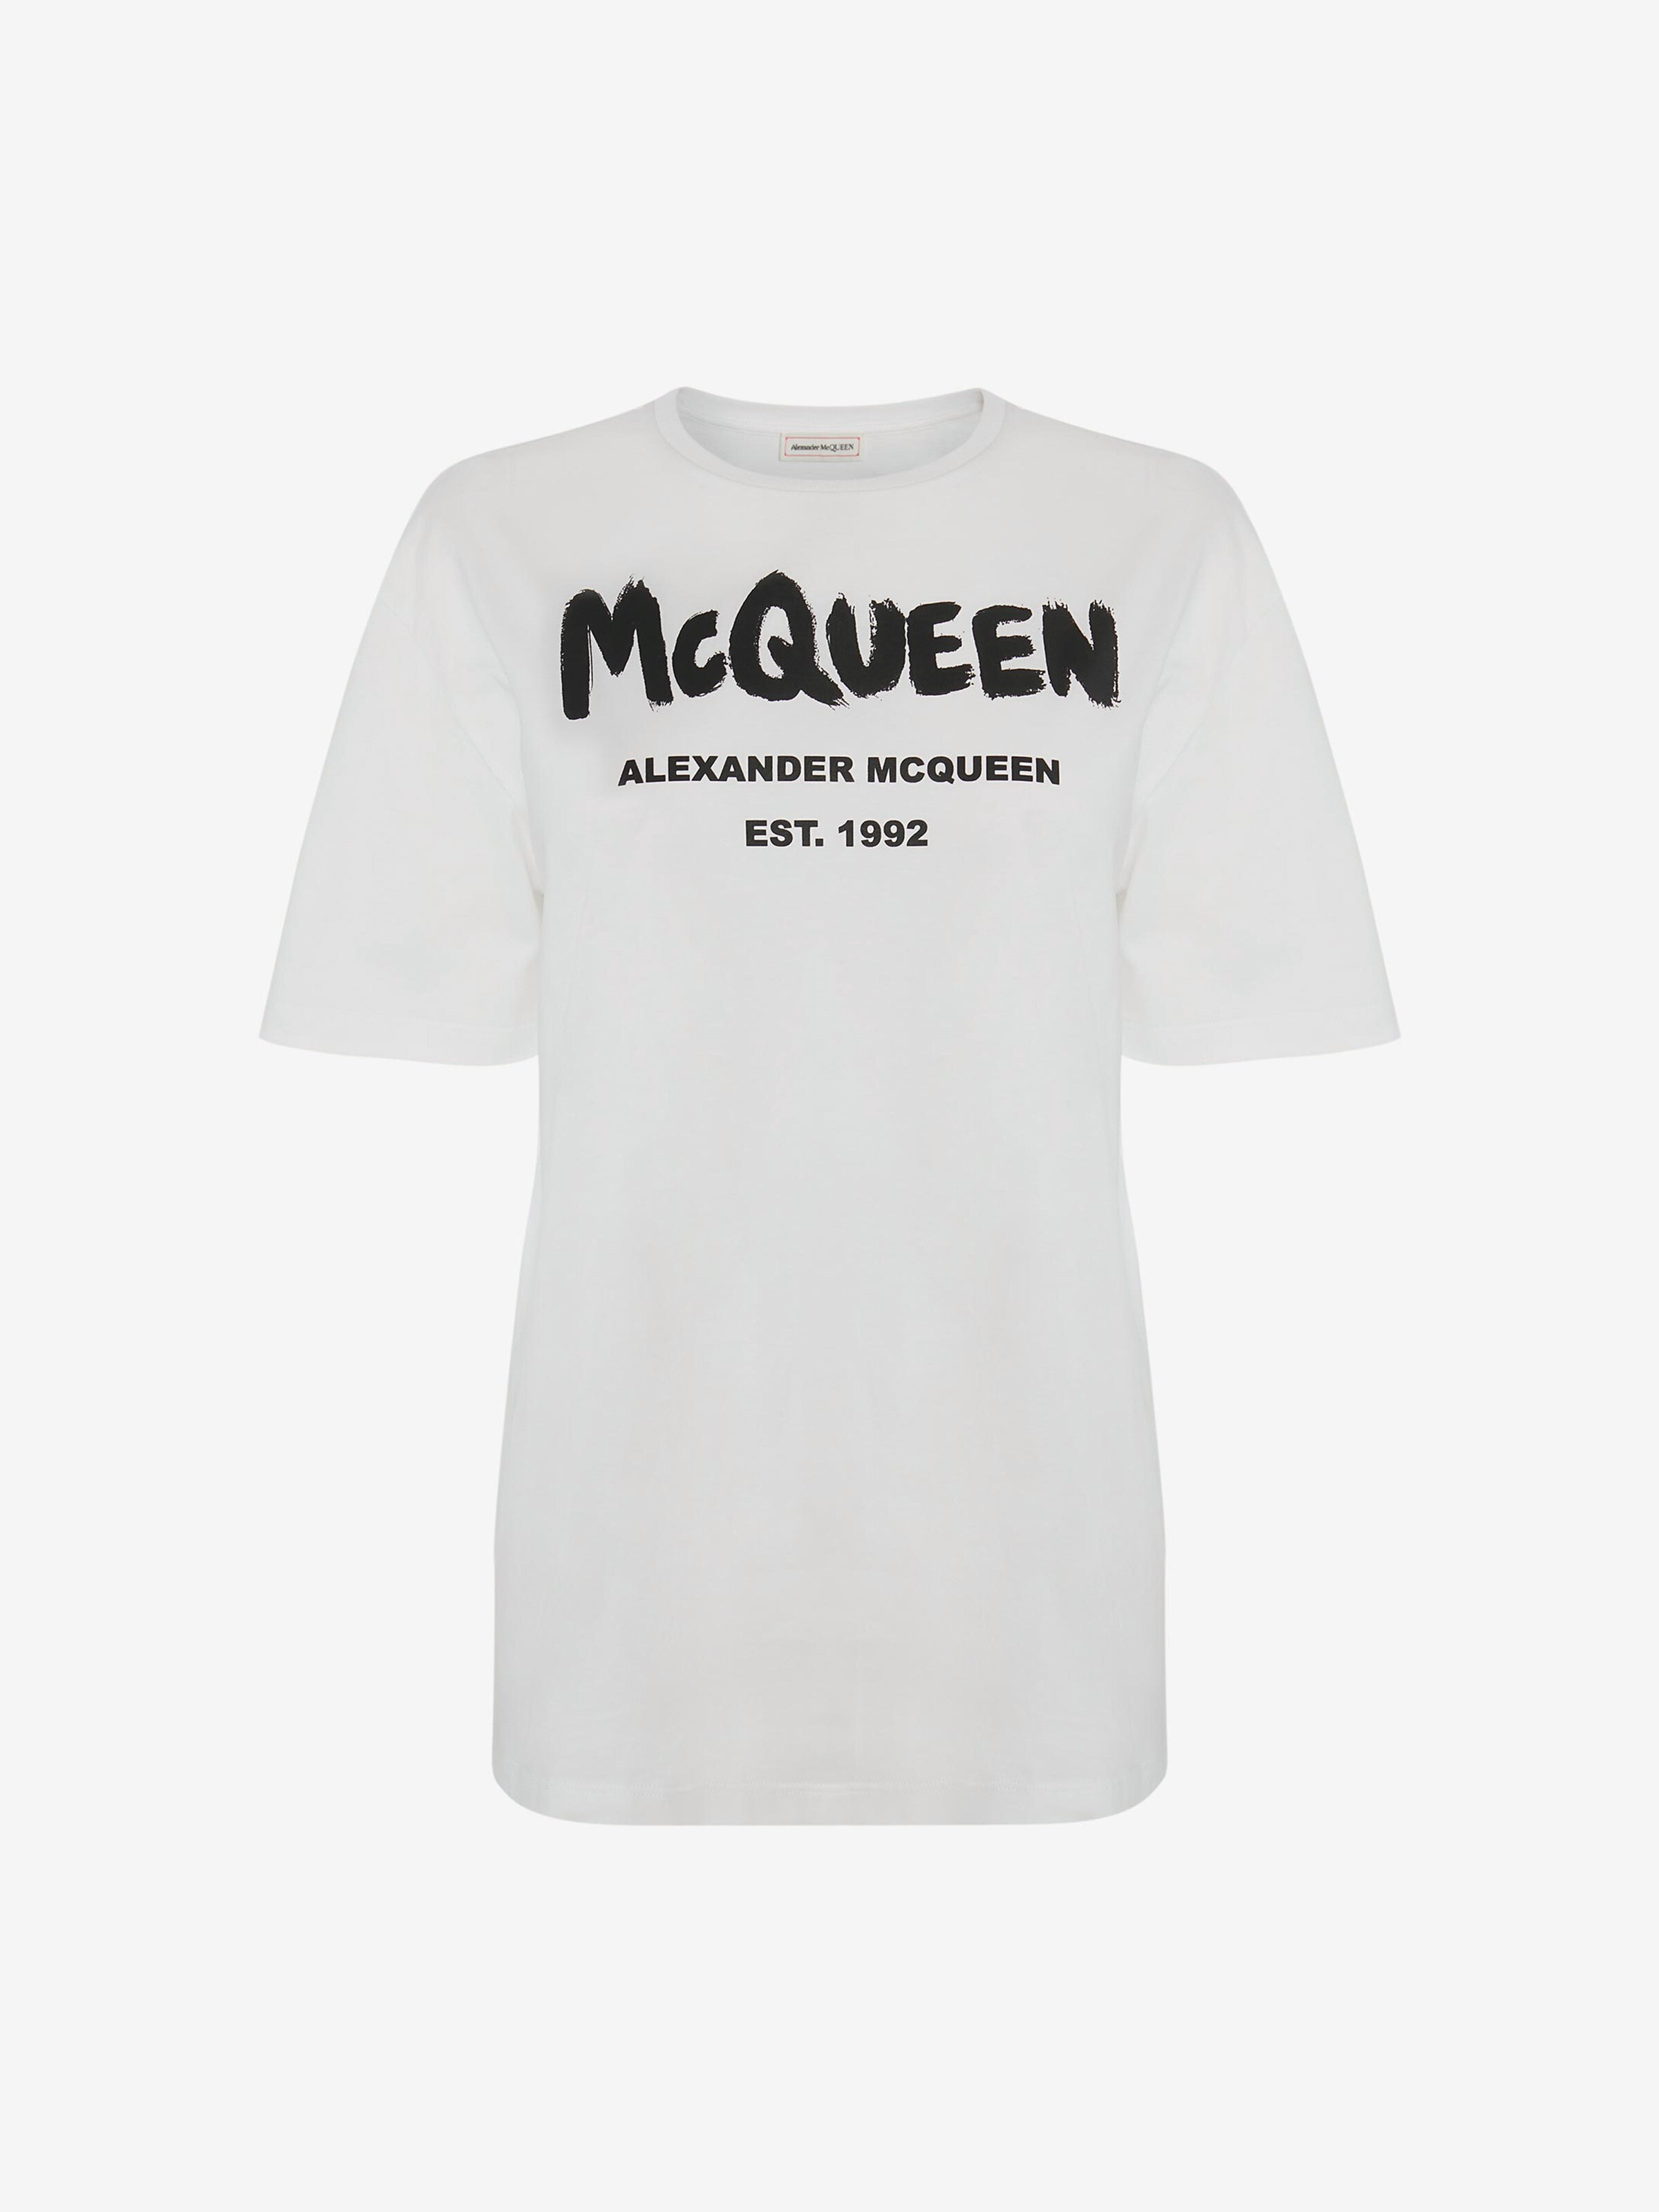 McQueen Graffiti T-Shirt in White/Black | Alexander McQueen US